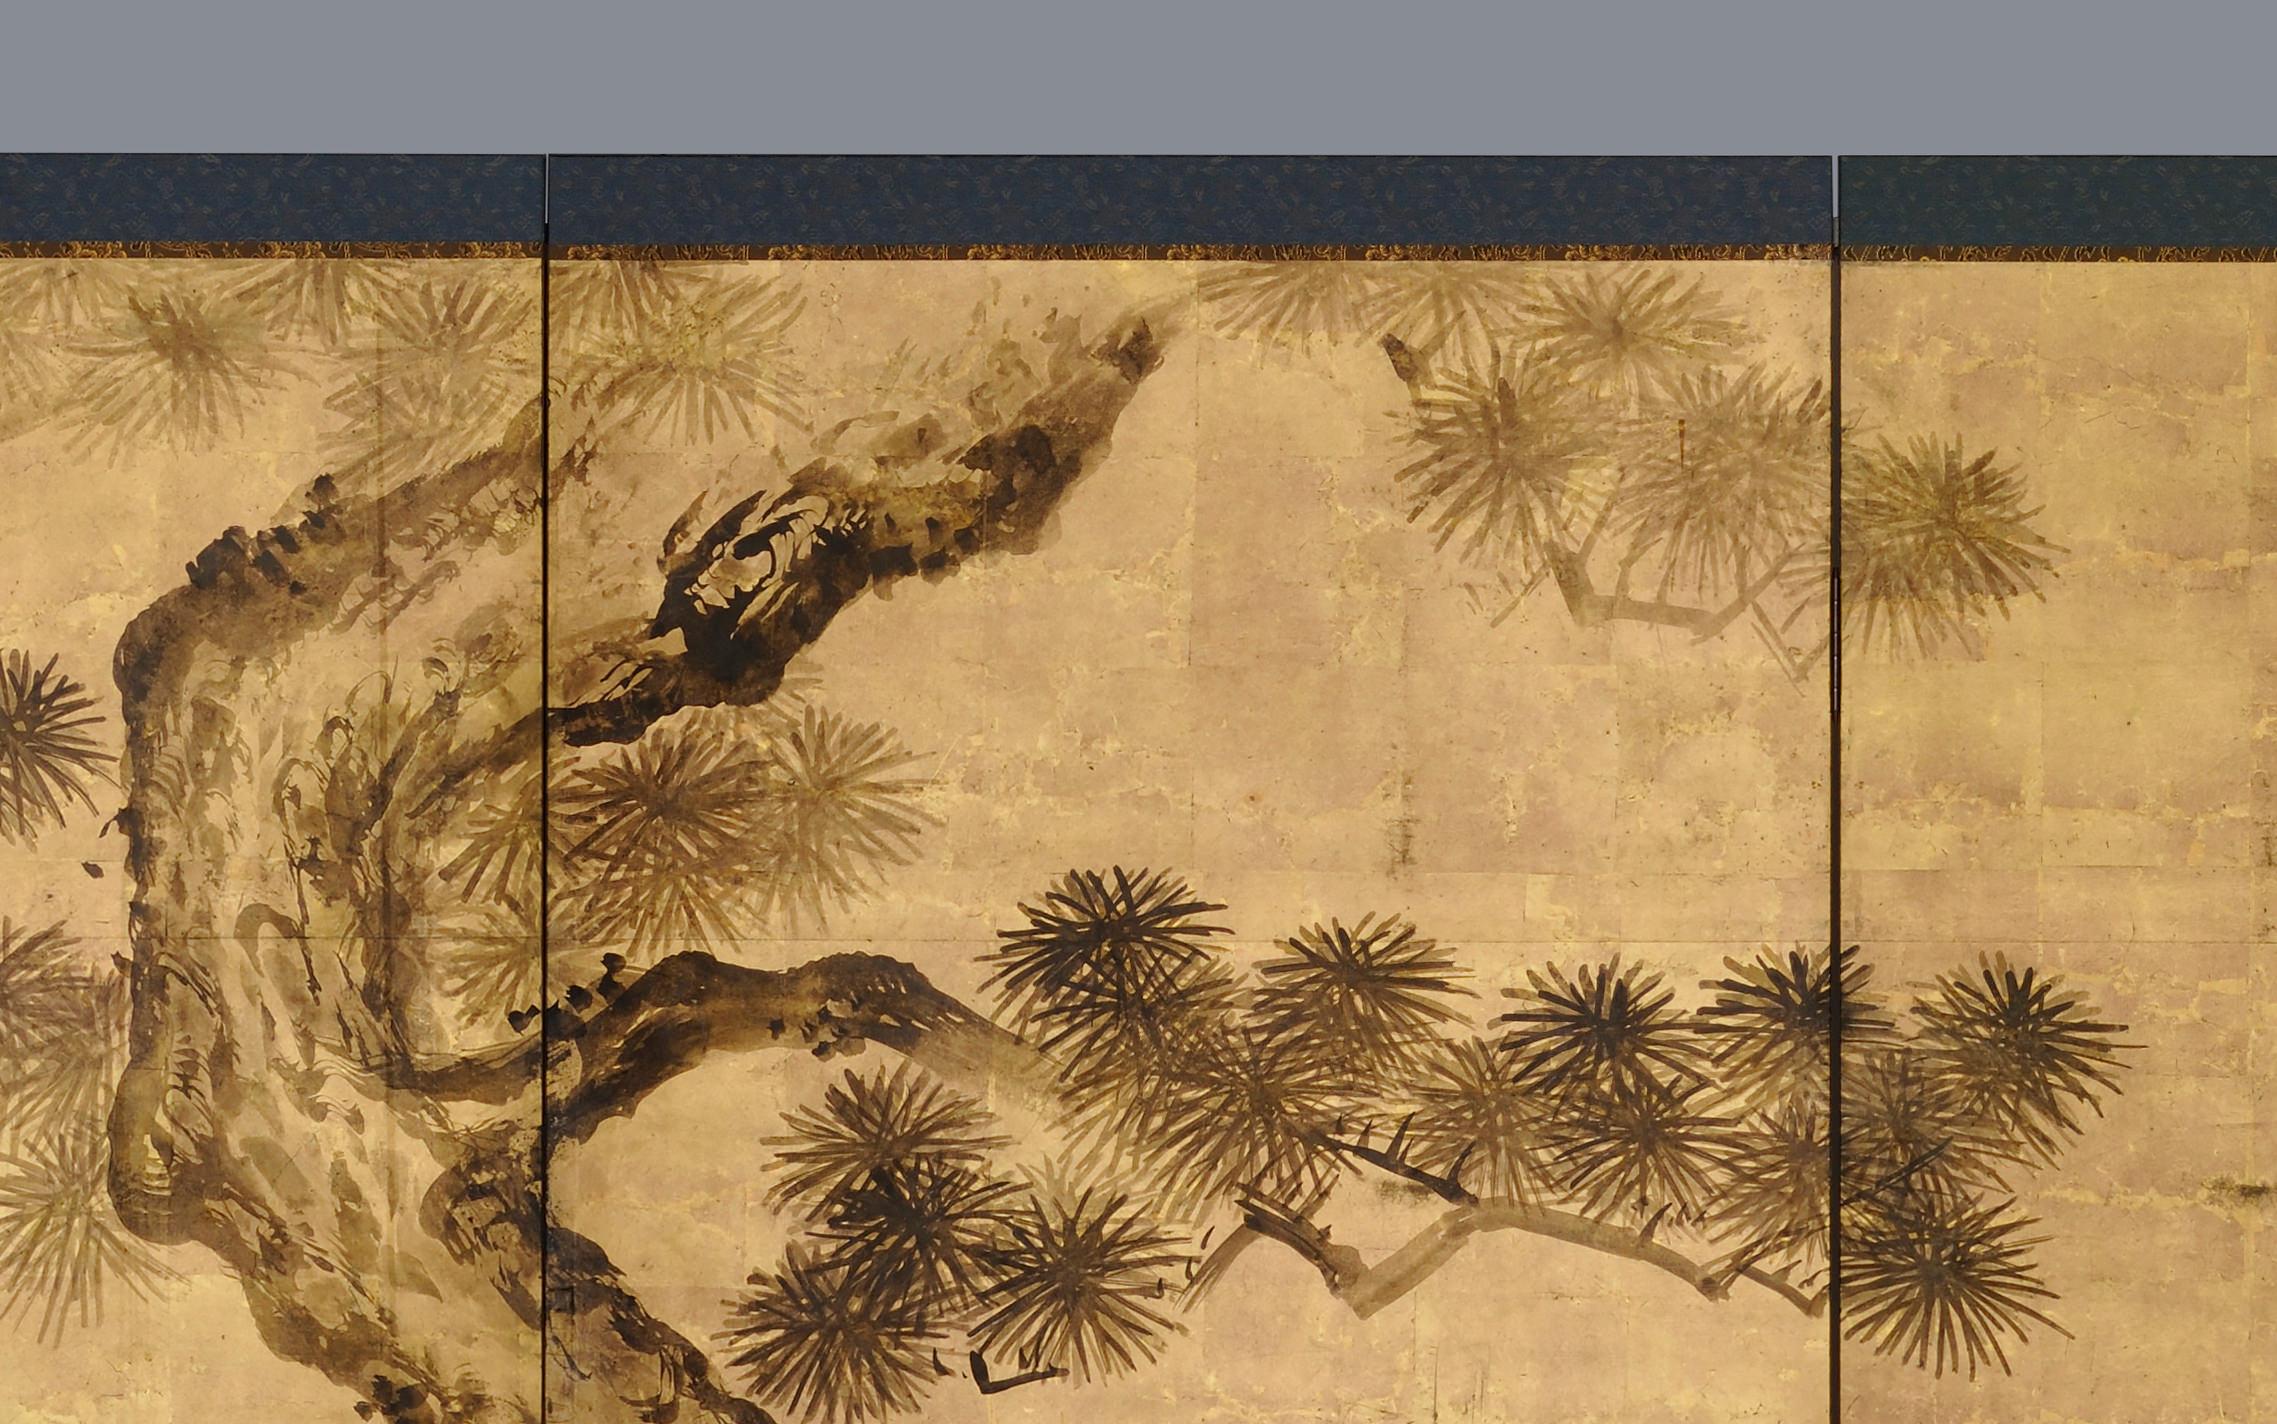 Edo Japanese Screen Painting, Late 17th Century, Crows & Pine by Kano Chikanobu